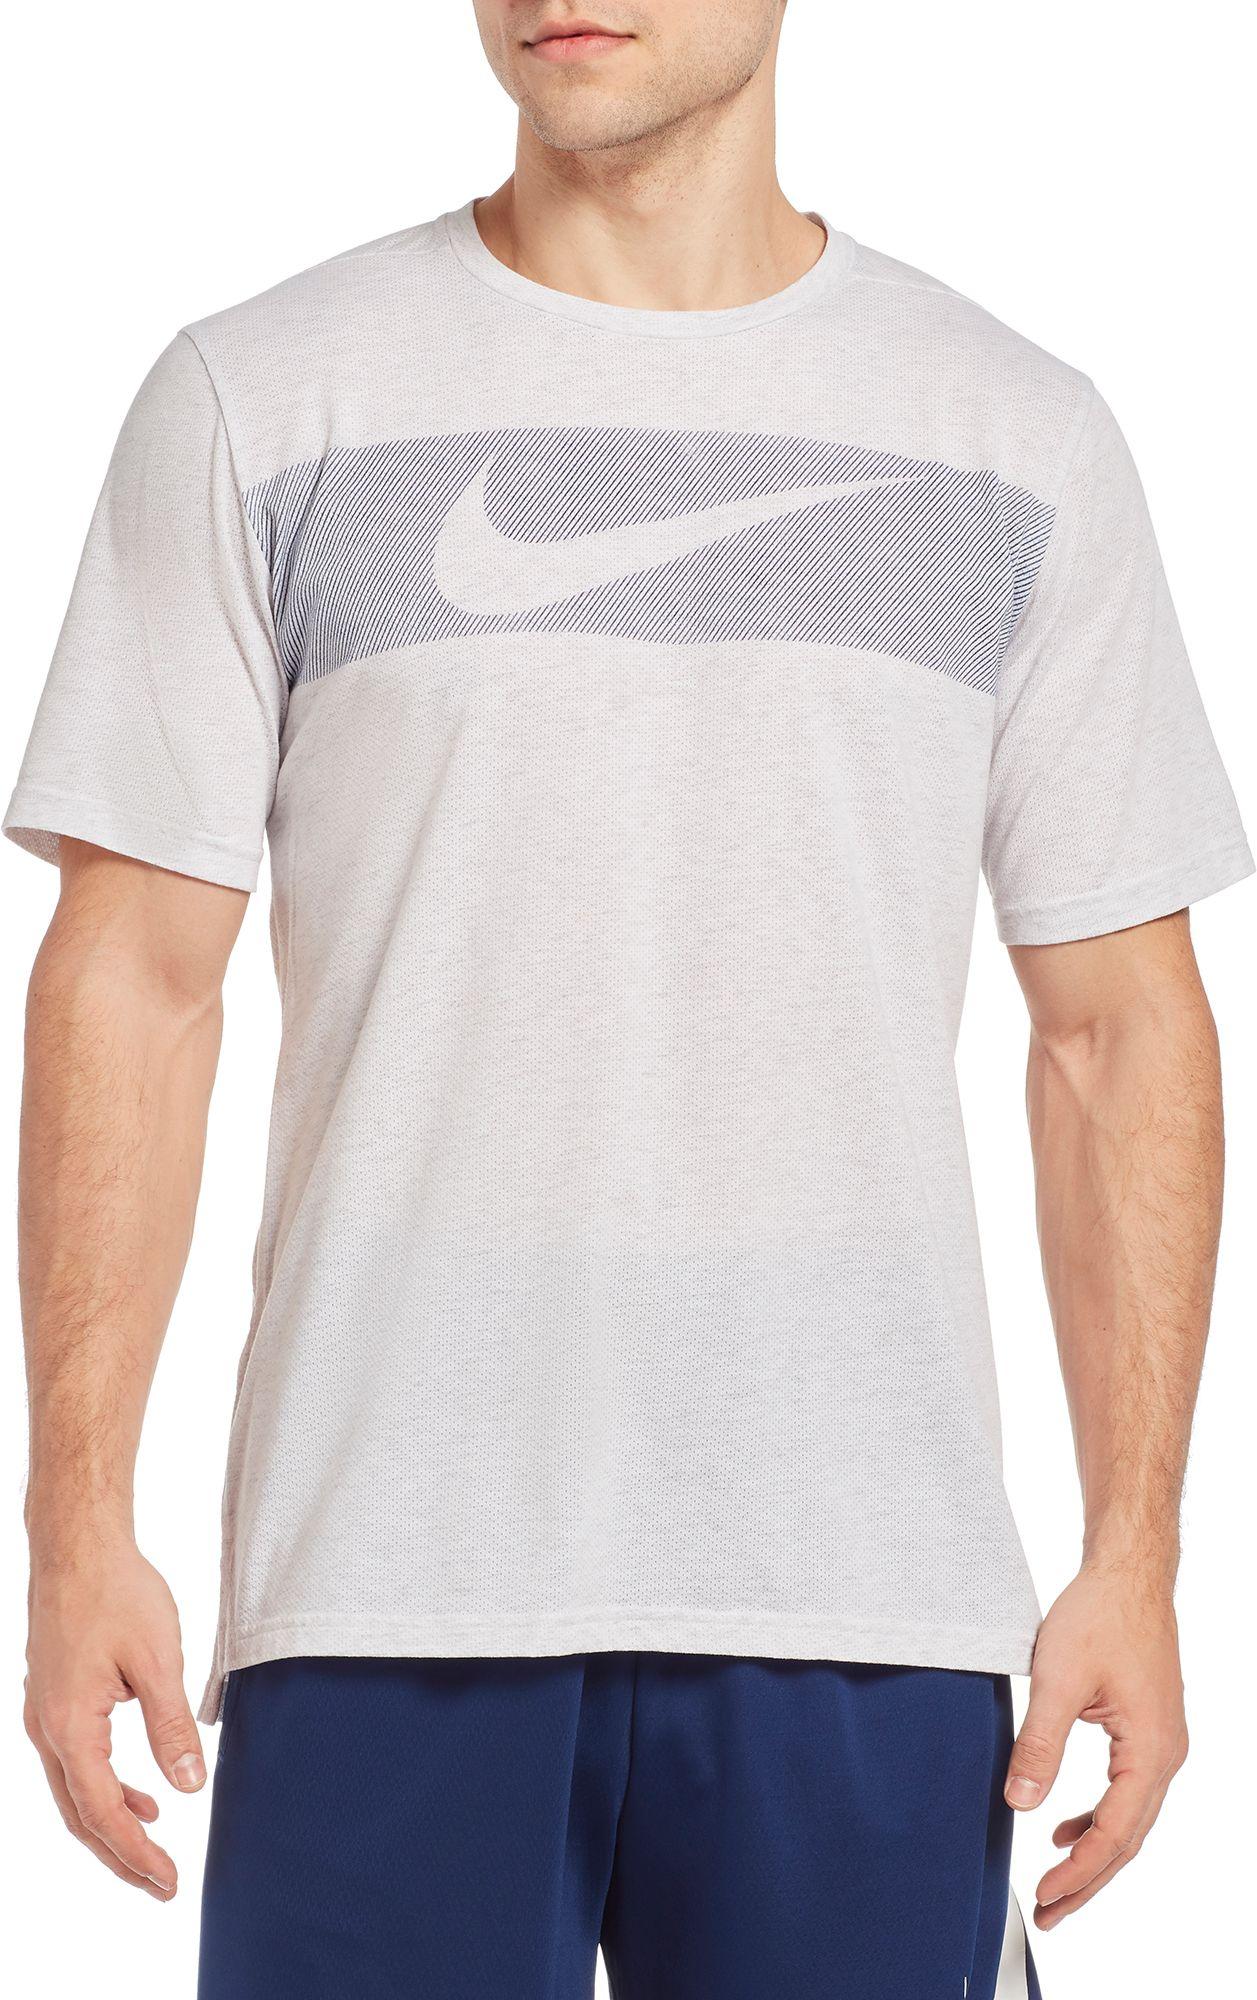 Nike Hyper Dry Graphic Tee in White for Men - Lyst